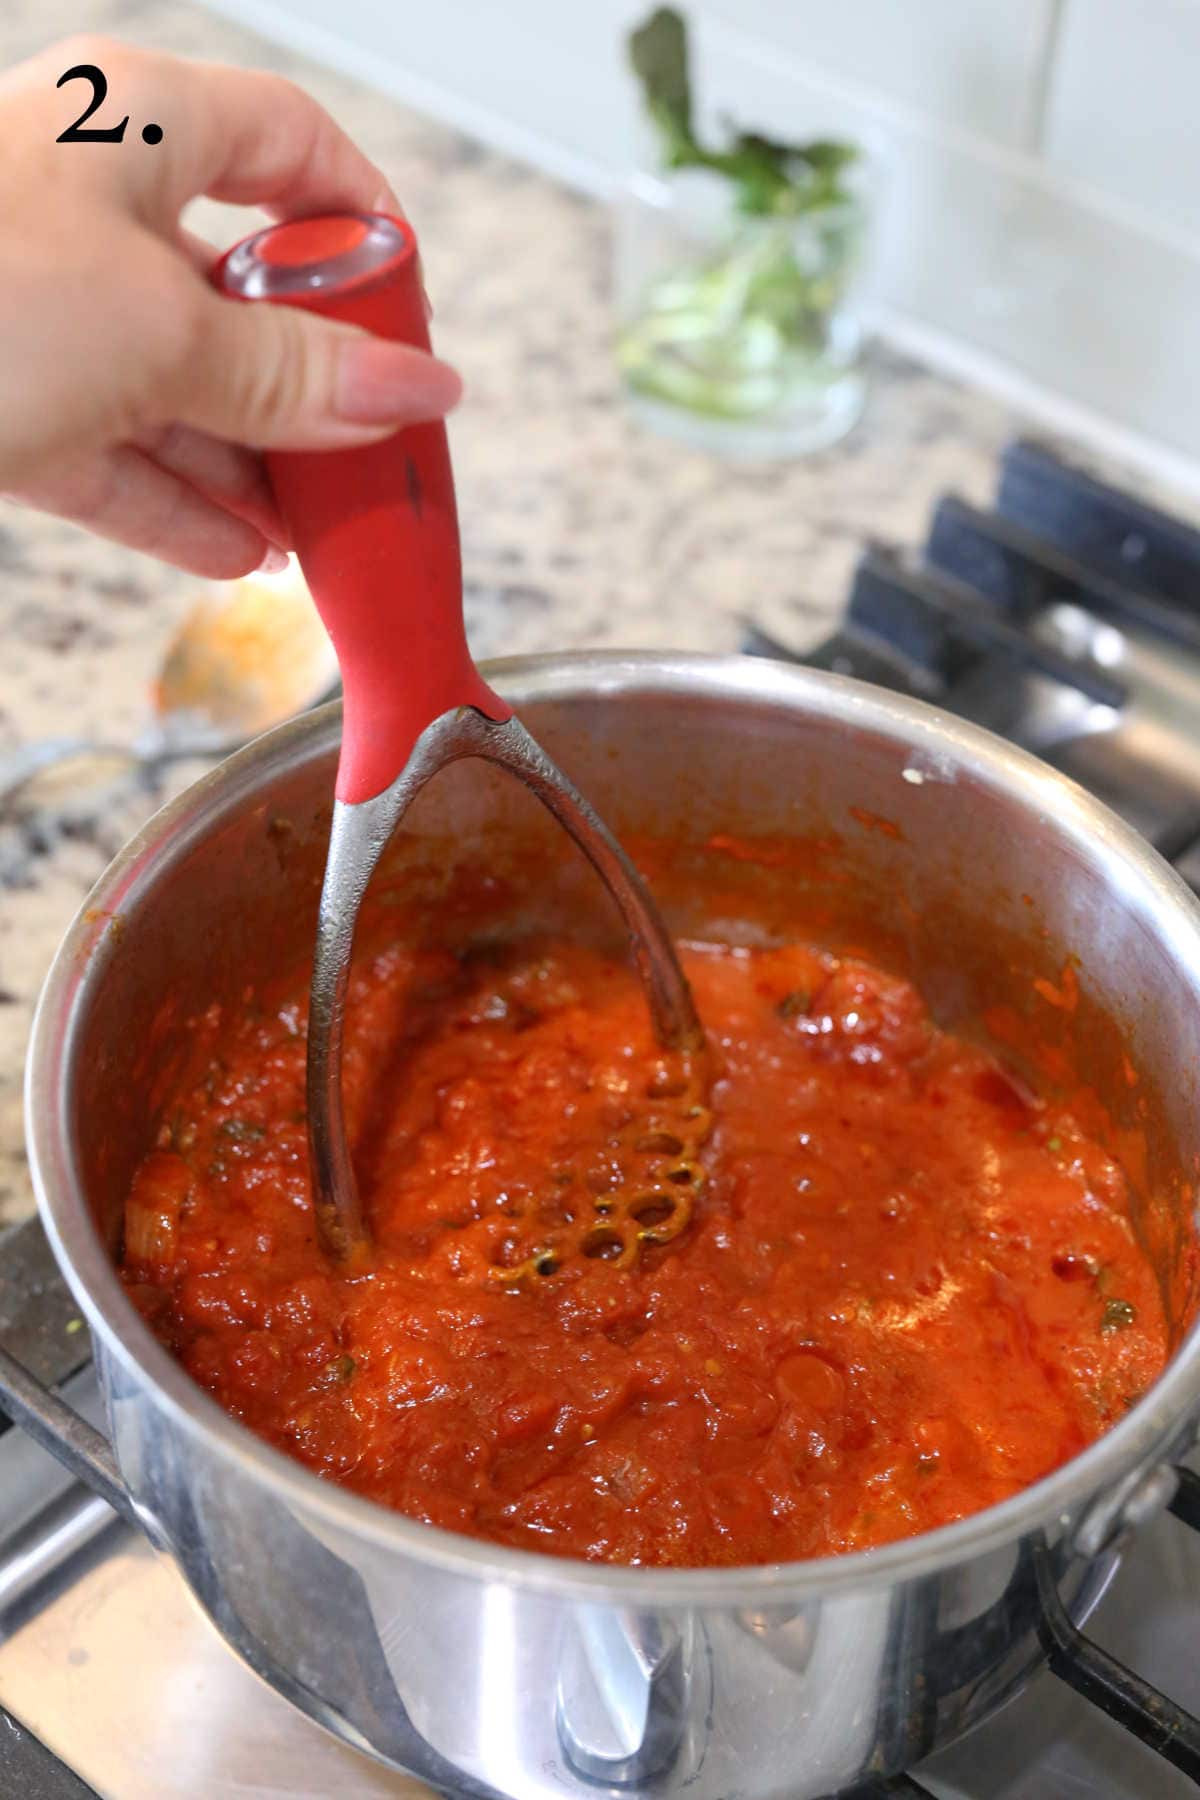 Making marinara sauce in a saucepan on the stove.